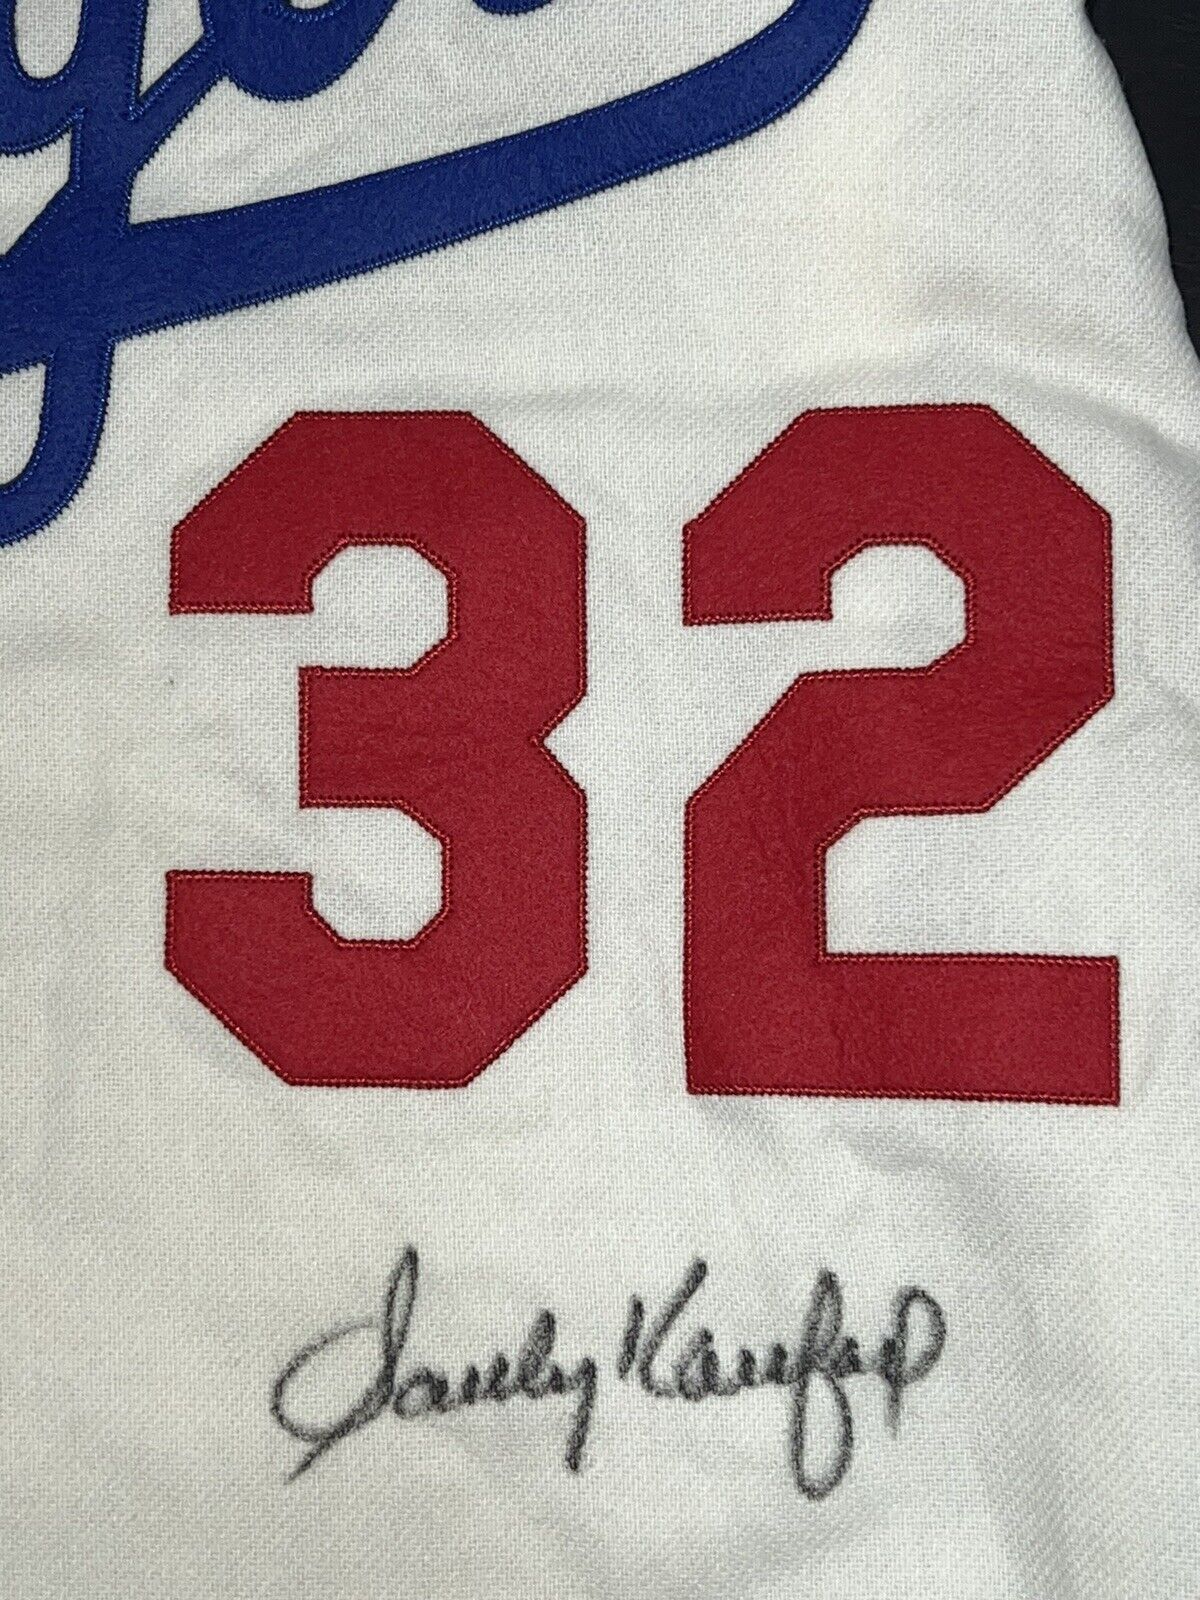 Sandy Koufax Signed Autograph Mitchell & Ness Jersey Dodgers 1955